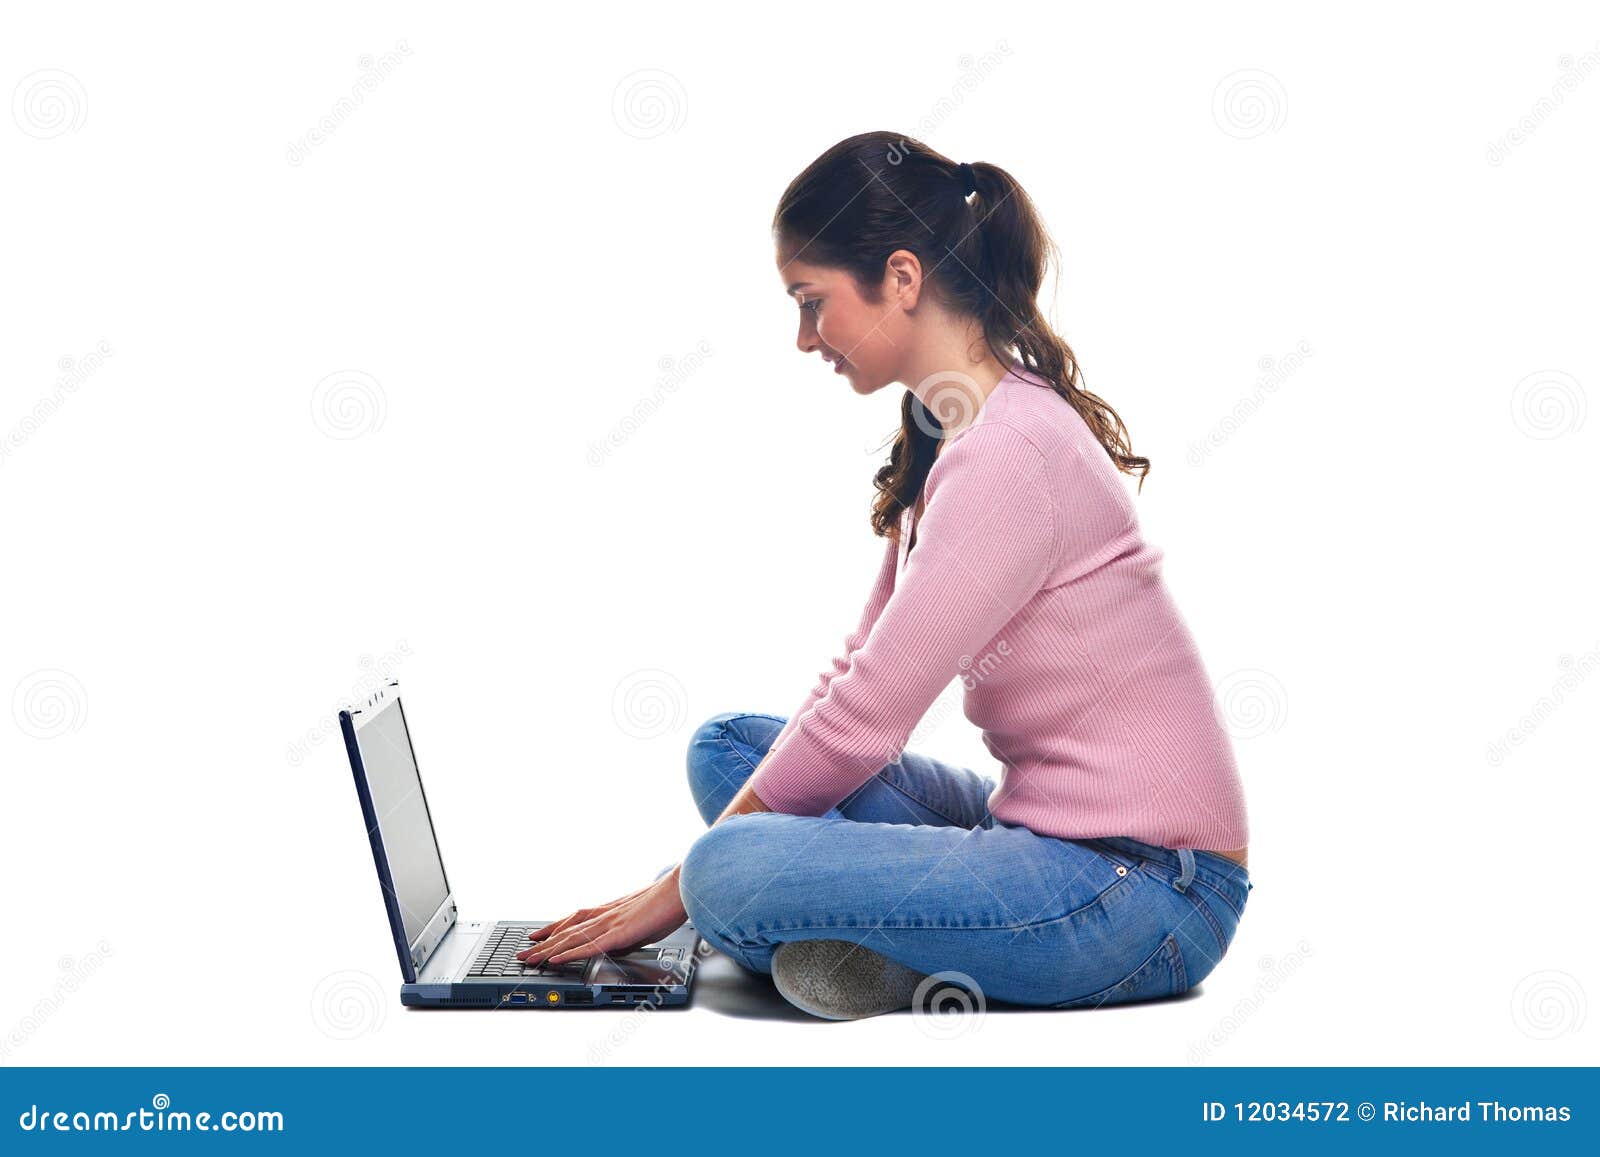 woman sat using a laptop